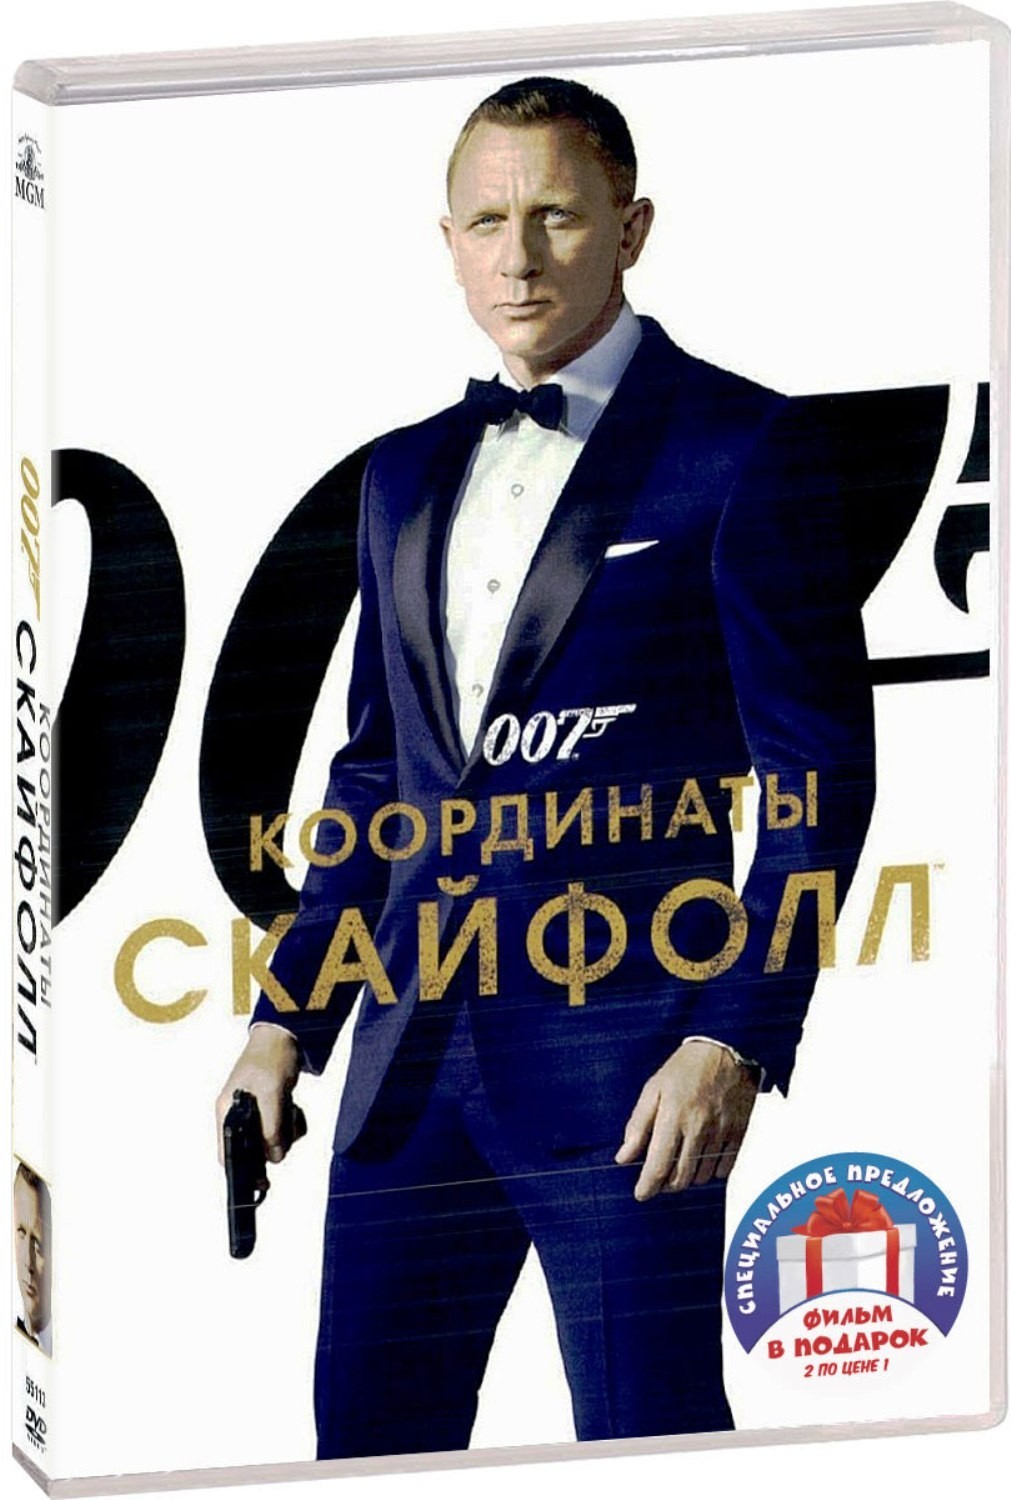 007: Координаты «Скайфолл» / Спектр (2 DVD) цена и фото